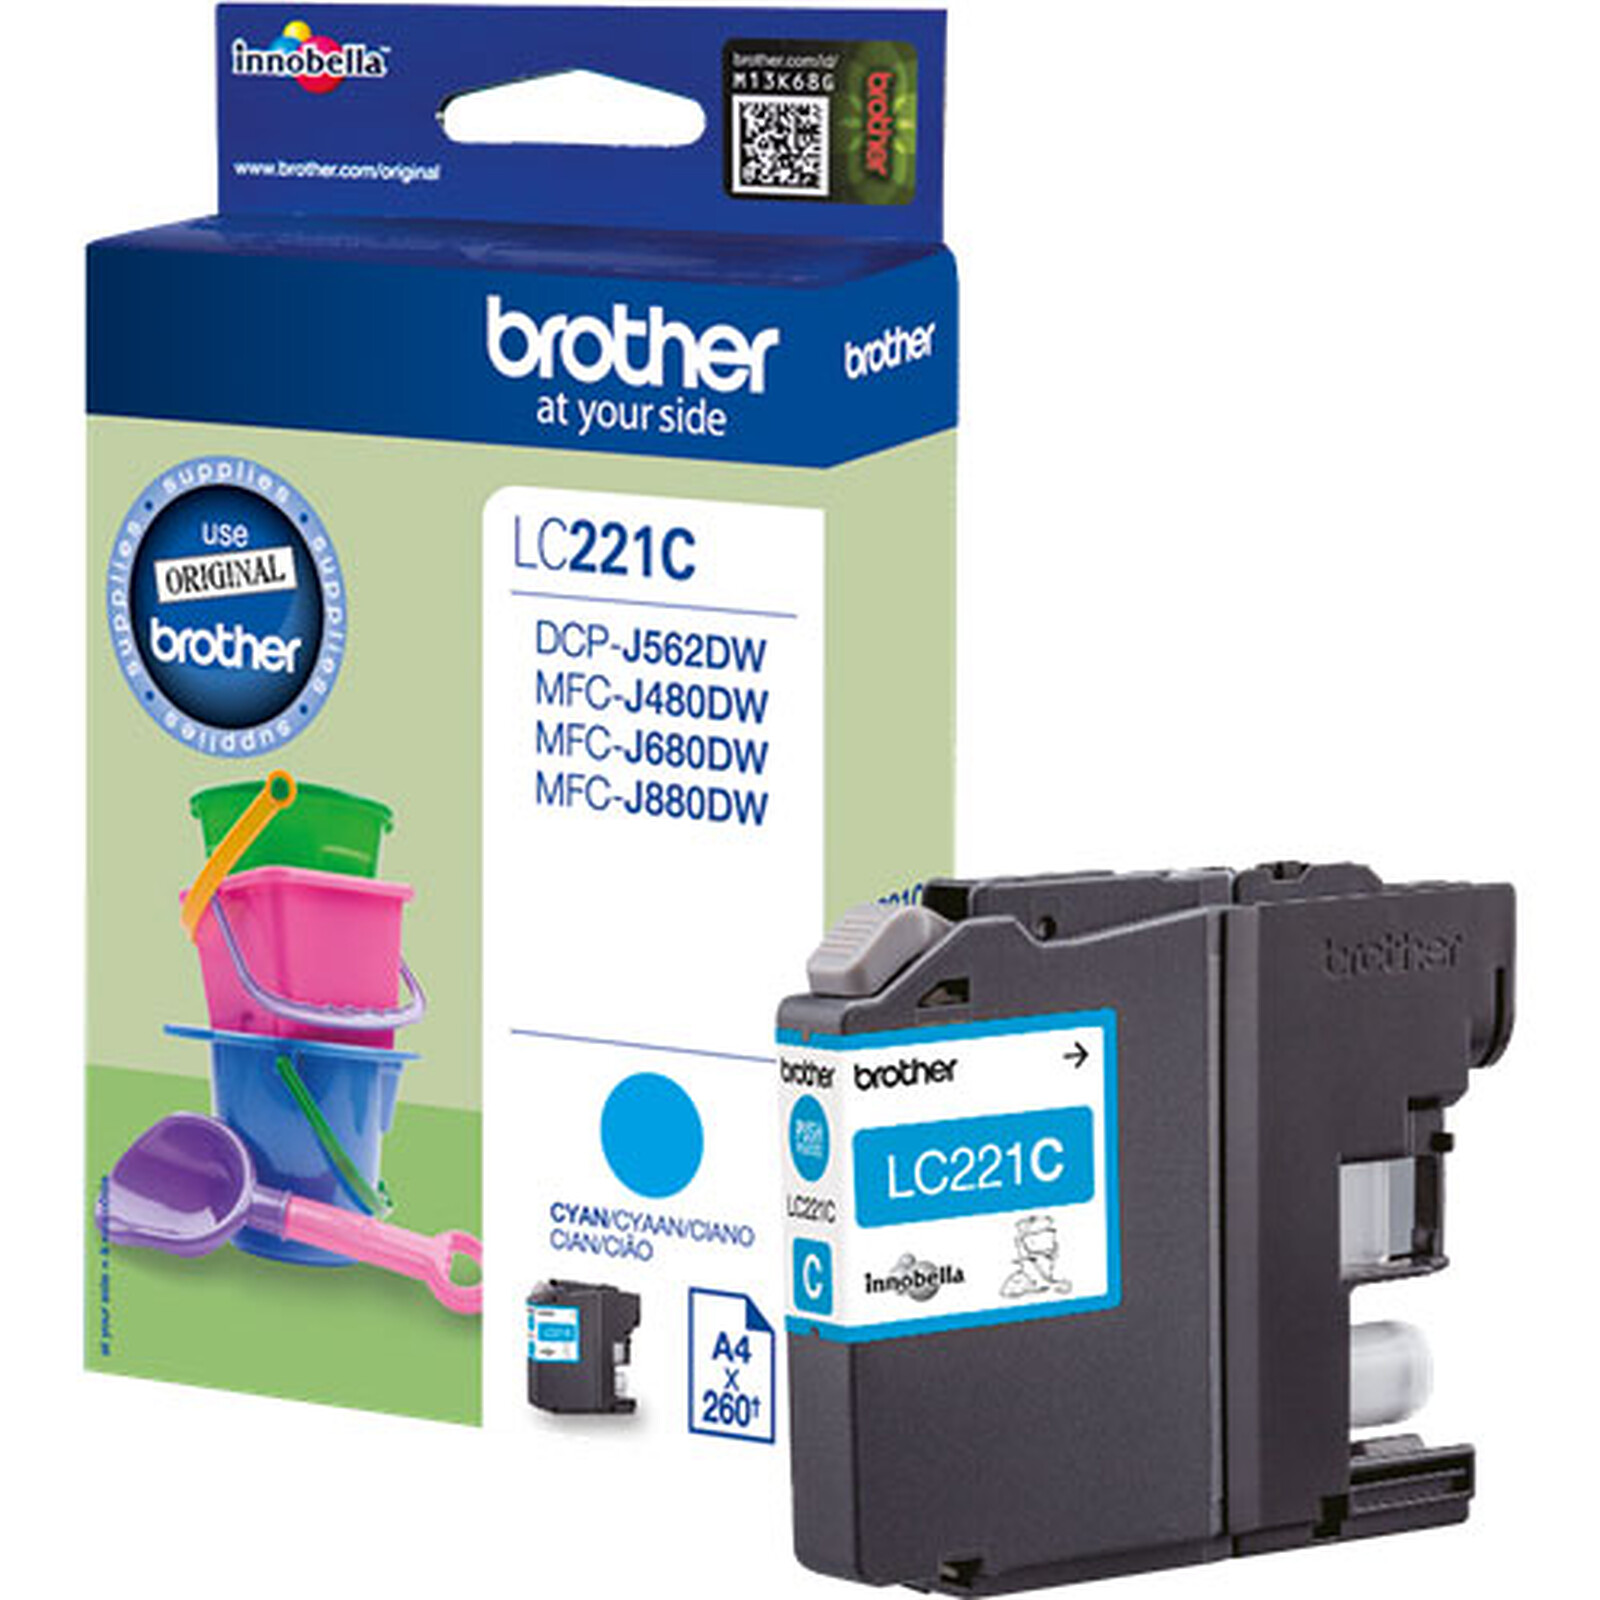 Brother LC3219XL Value Pack x 3 (Noir, Cyan, Magenta, Jaune) - Cartouche  imprimante - LDLC